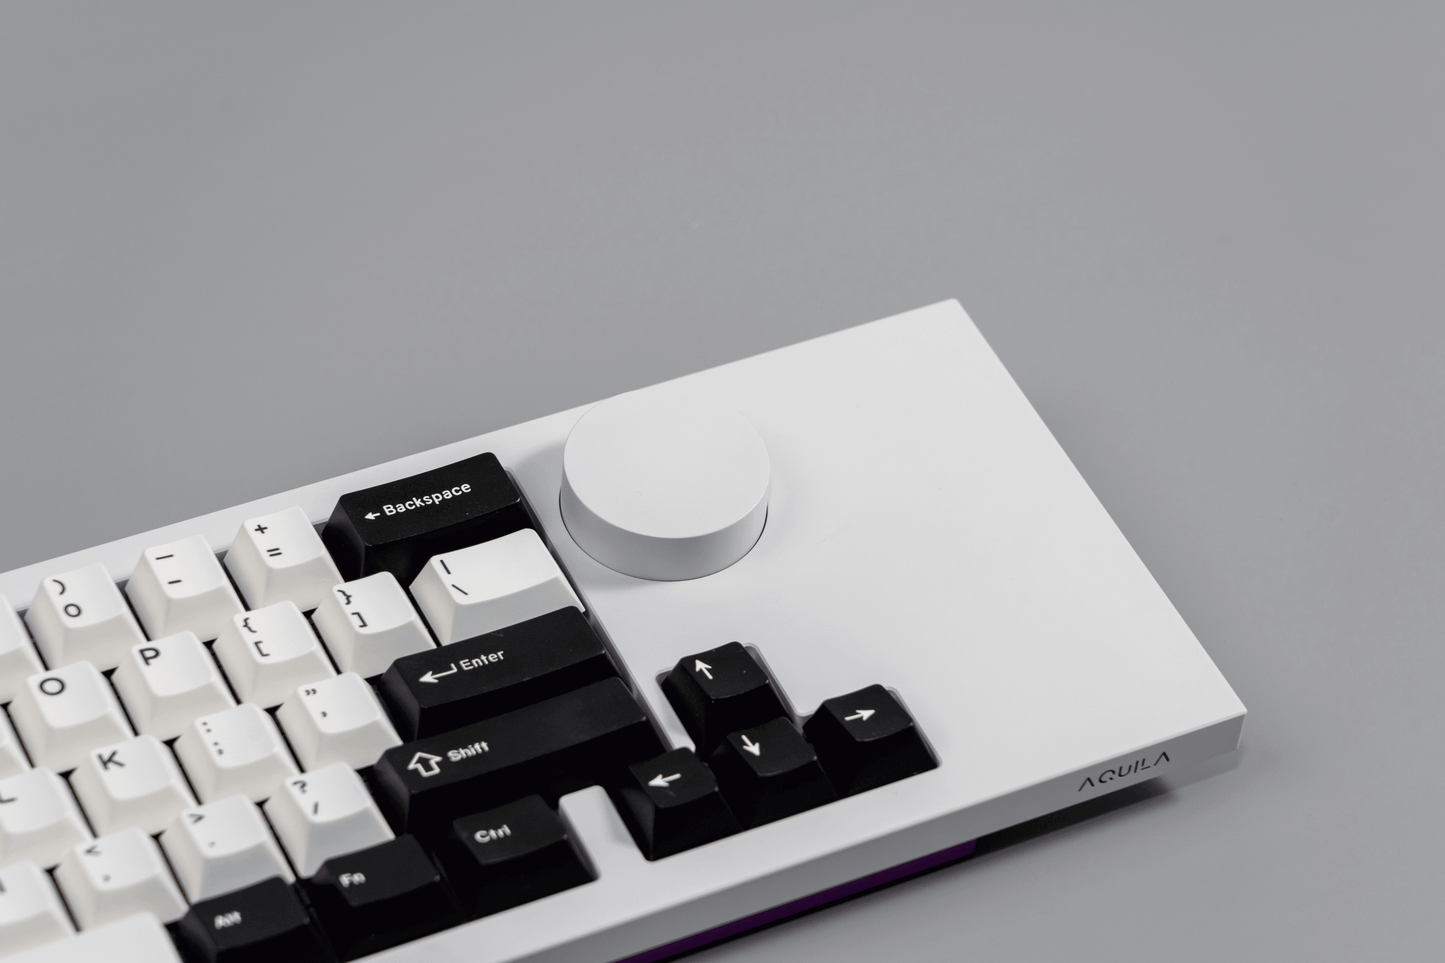 [Ended] Aquila Keyboard Kit